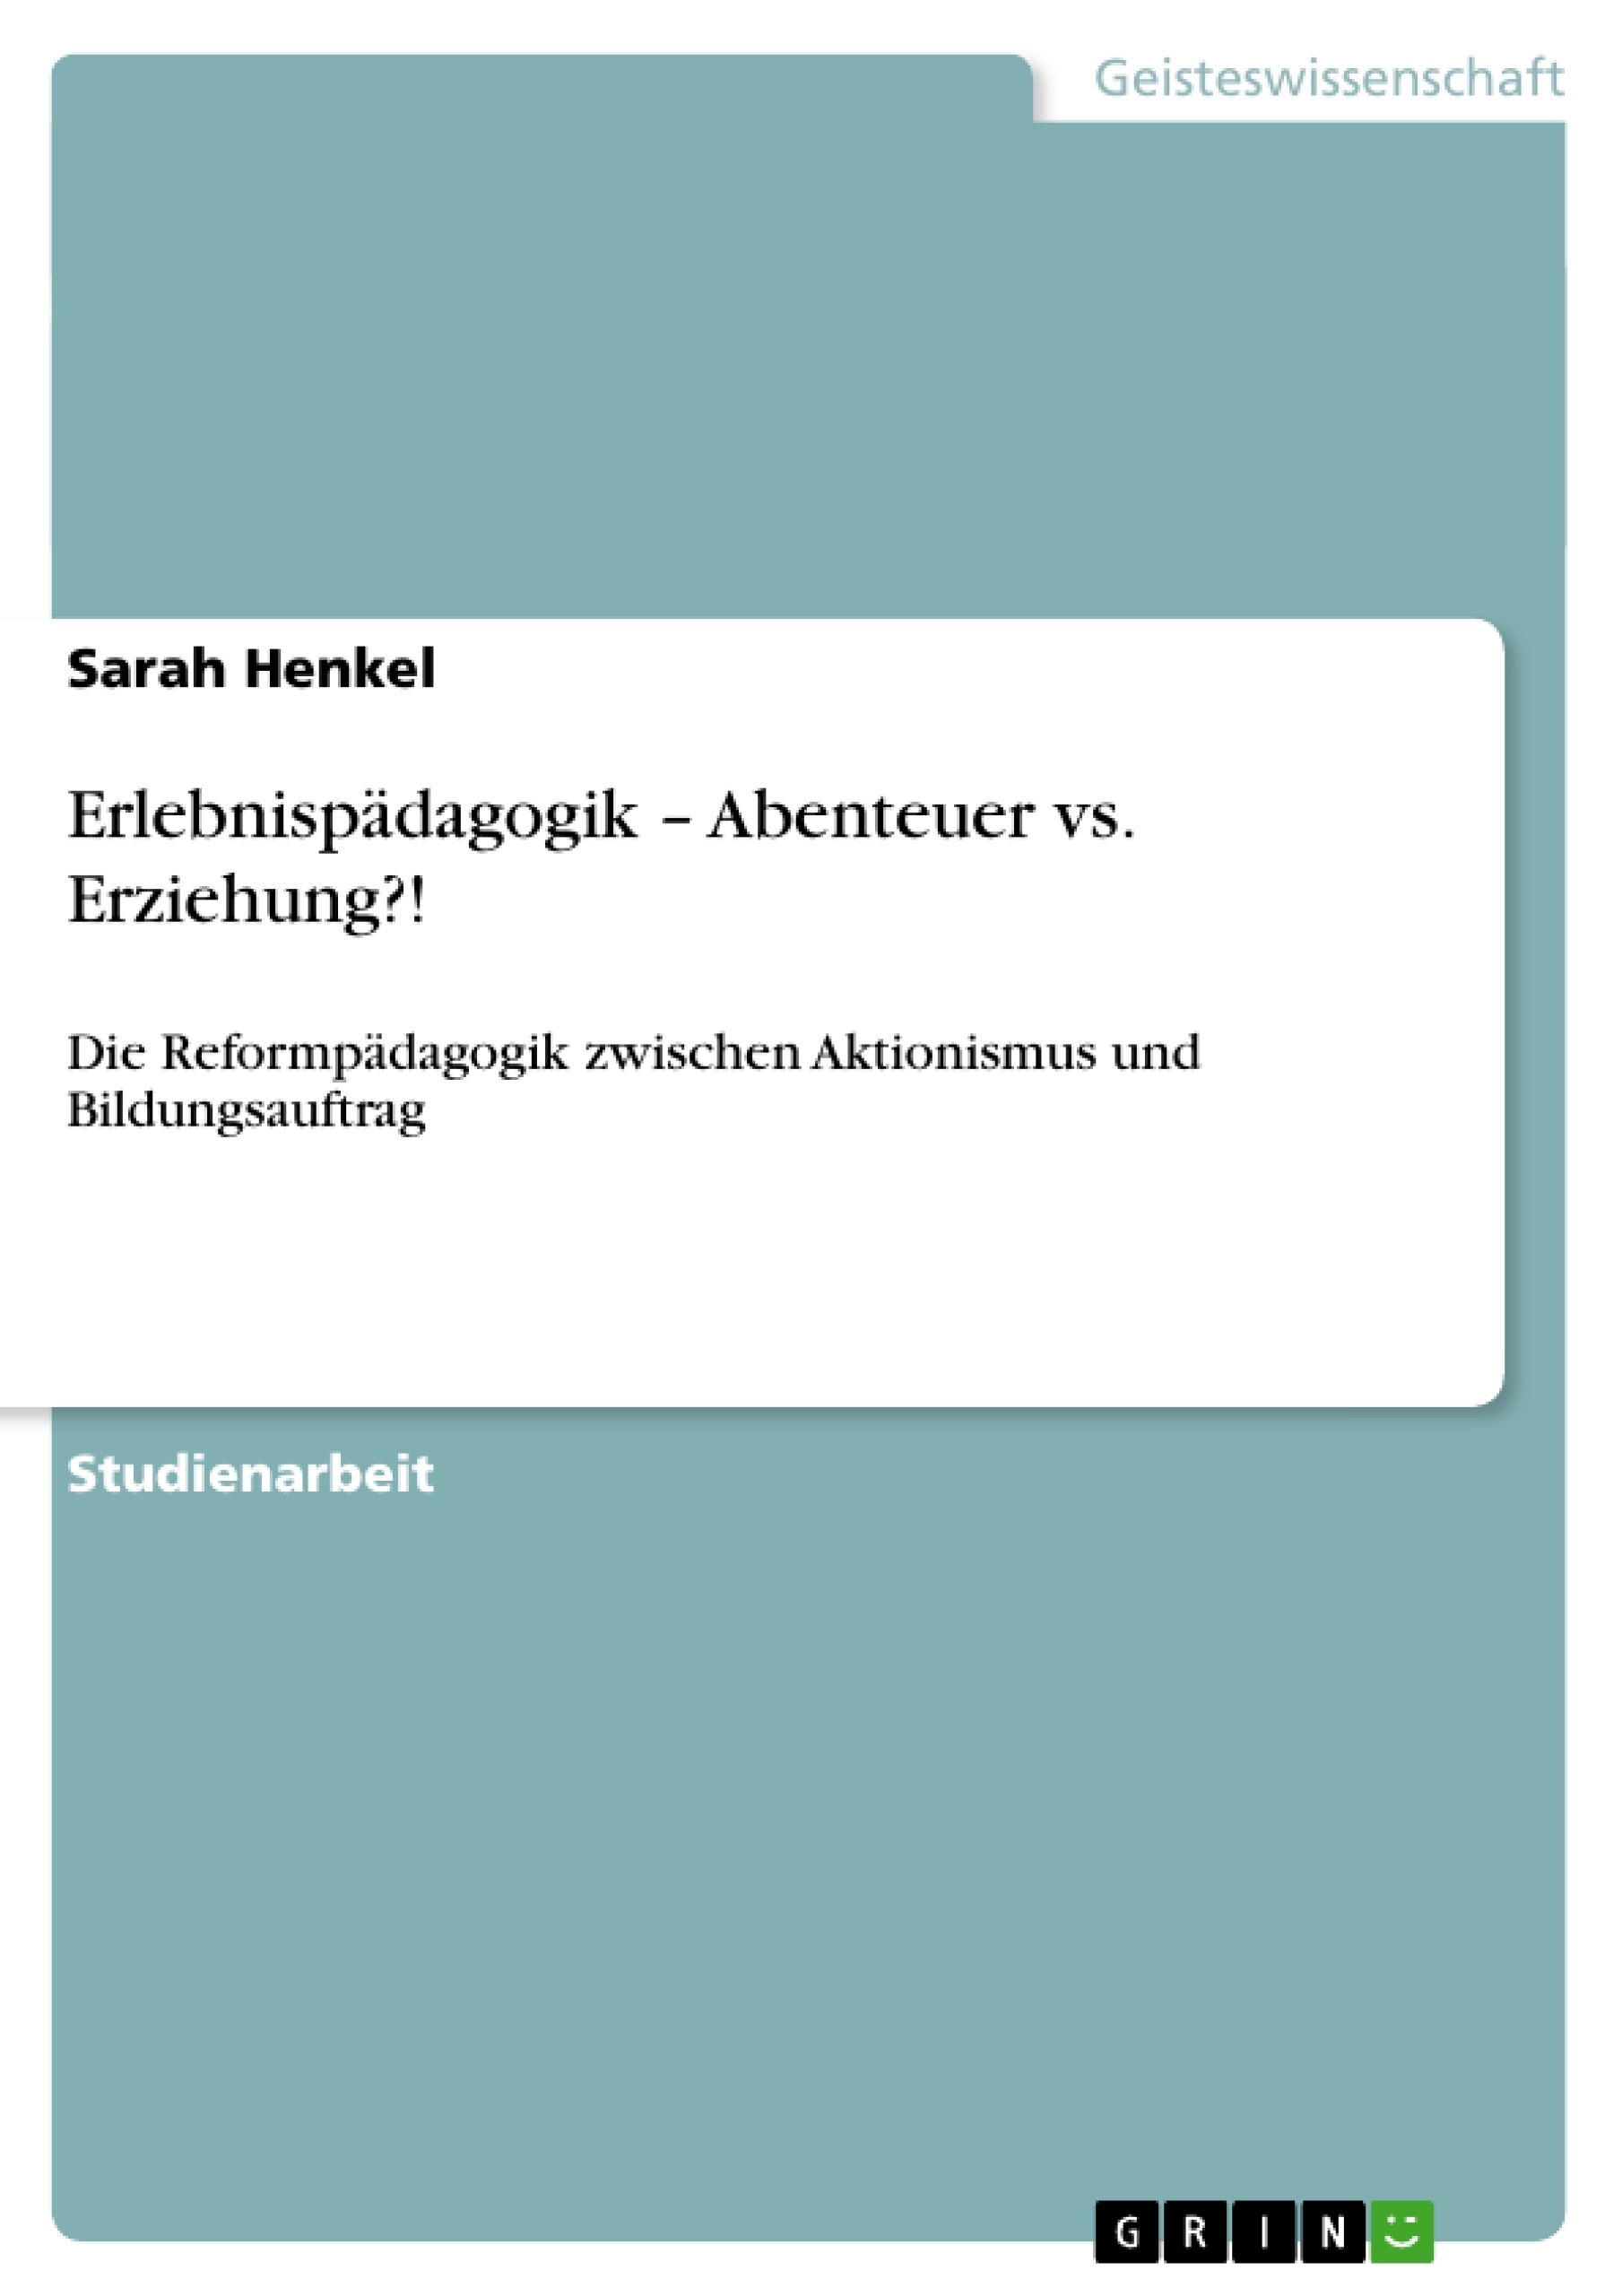 Title: Erlebnispädagogik – Abenteuer vs. Erziehung?!